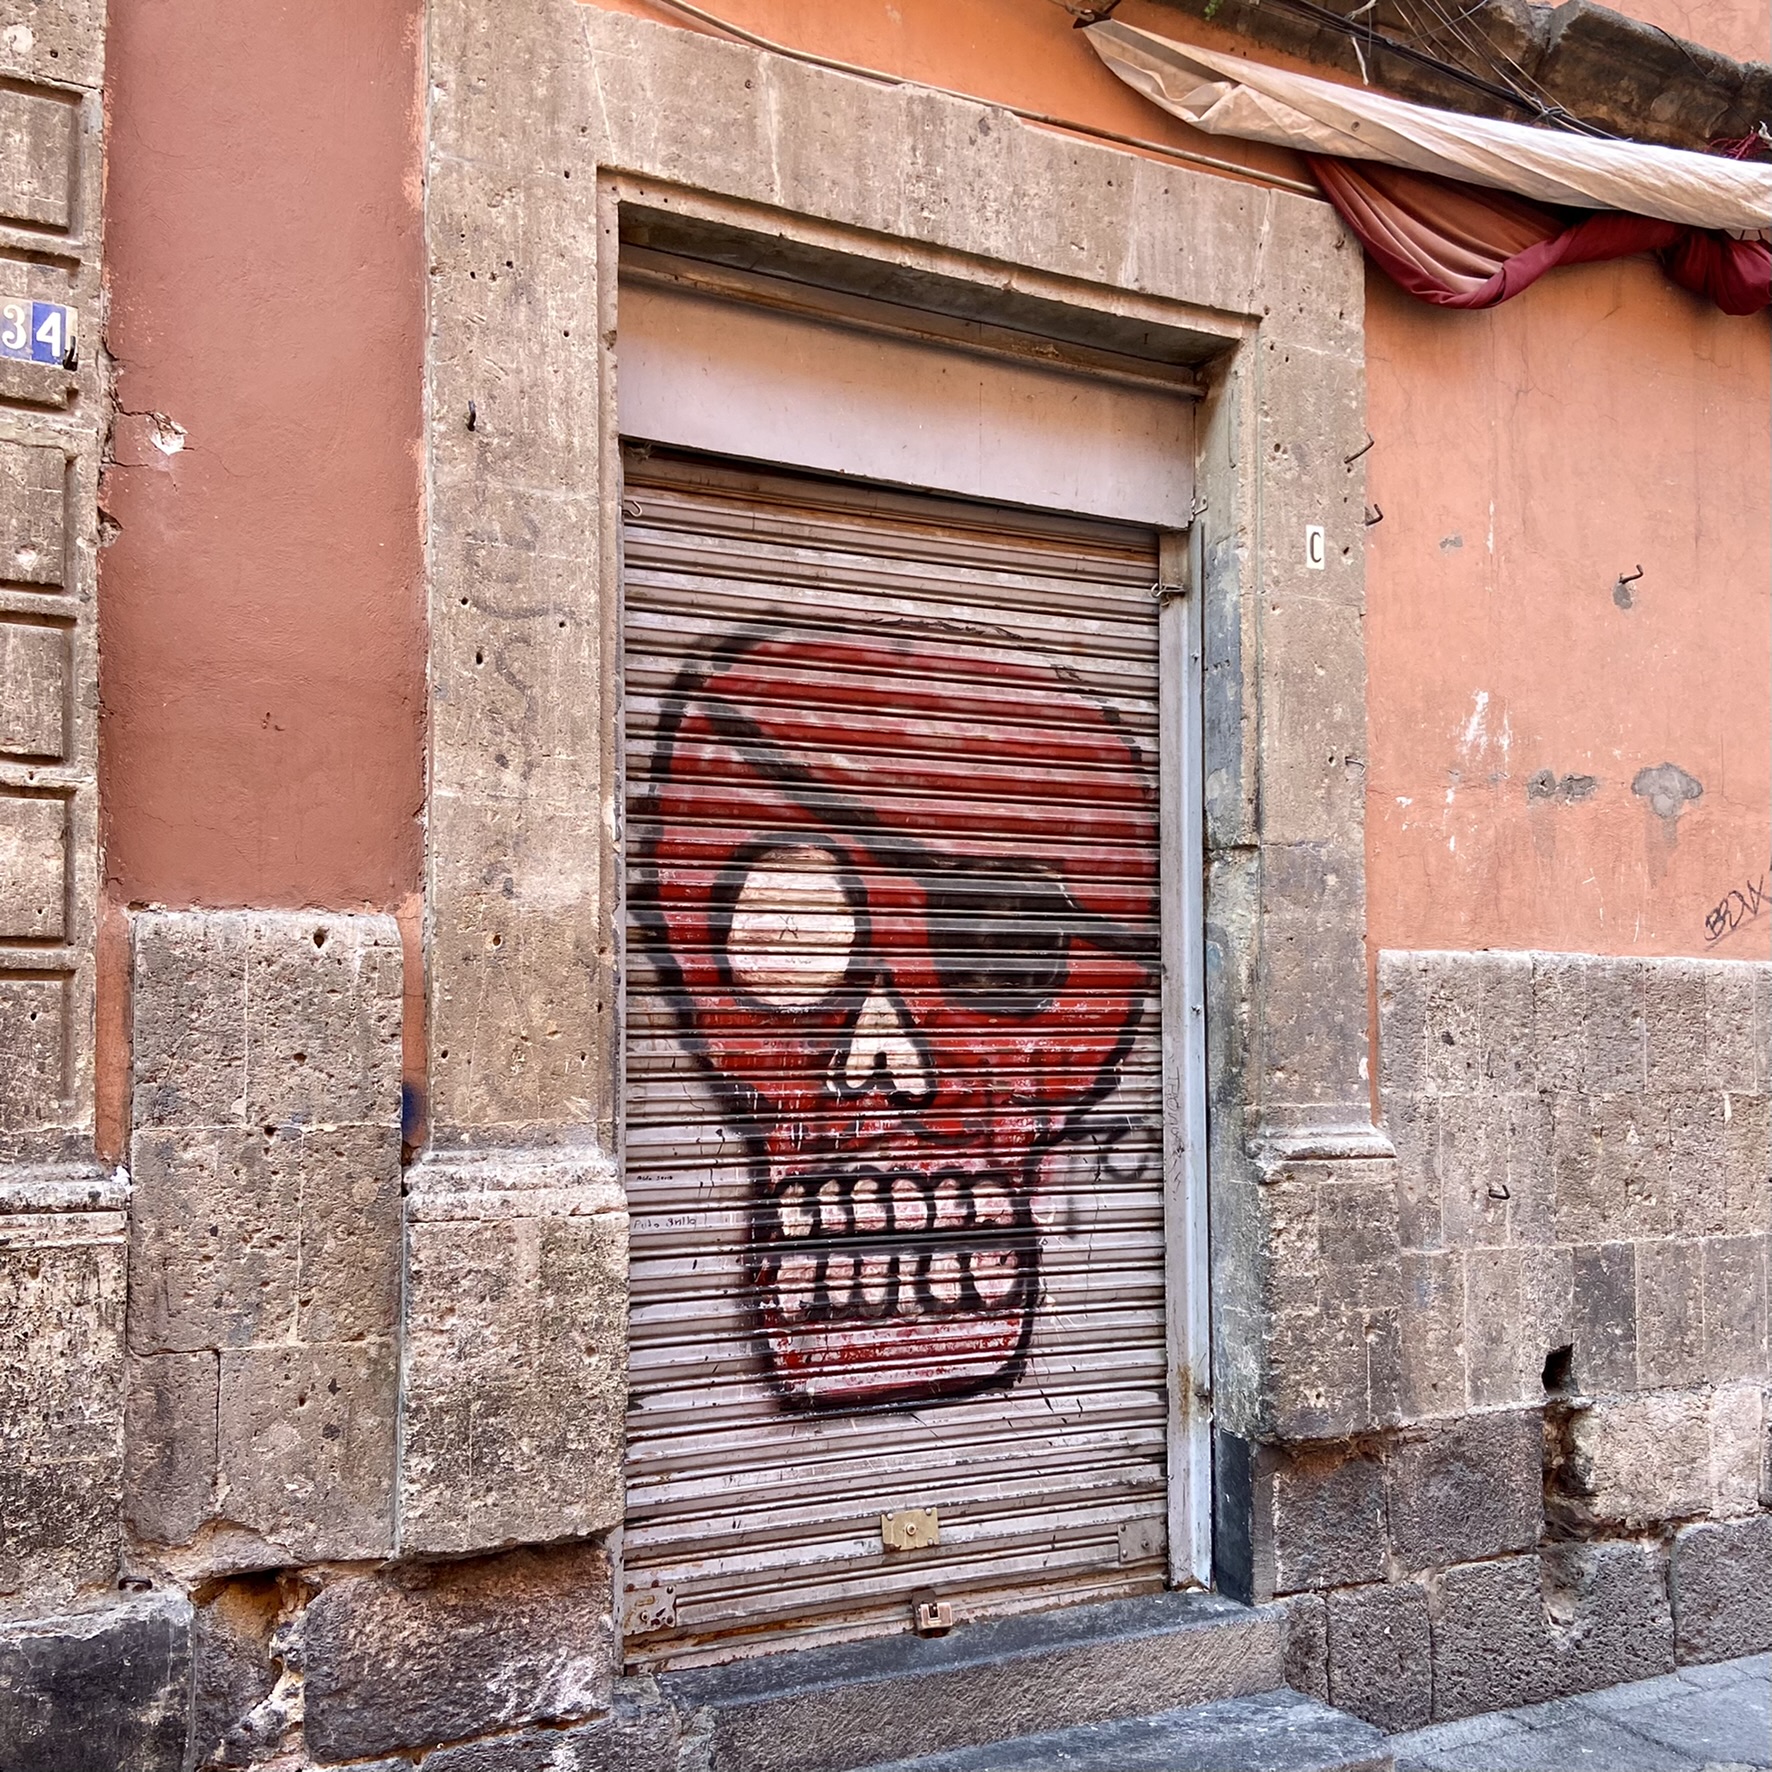 Skull street graffiti in centro historico